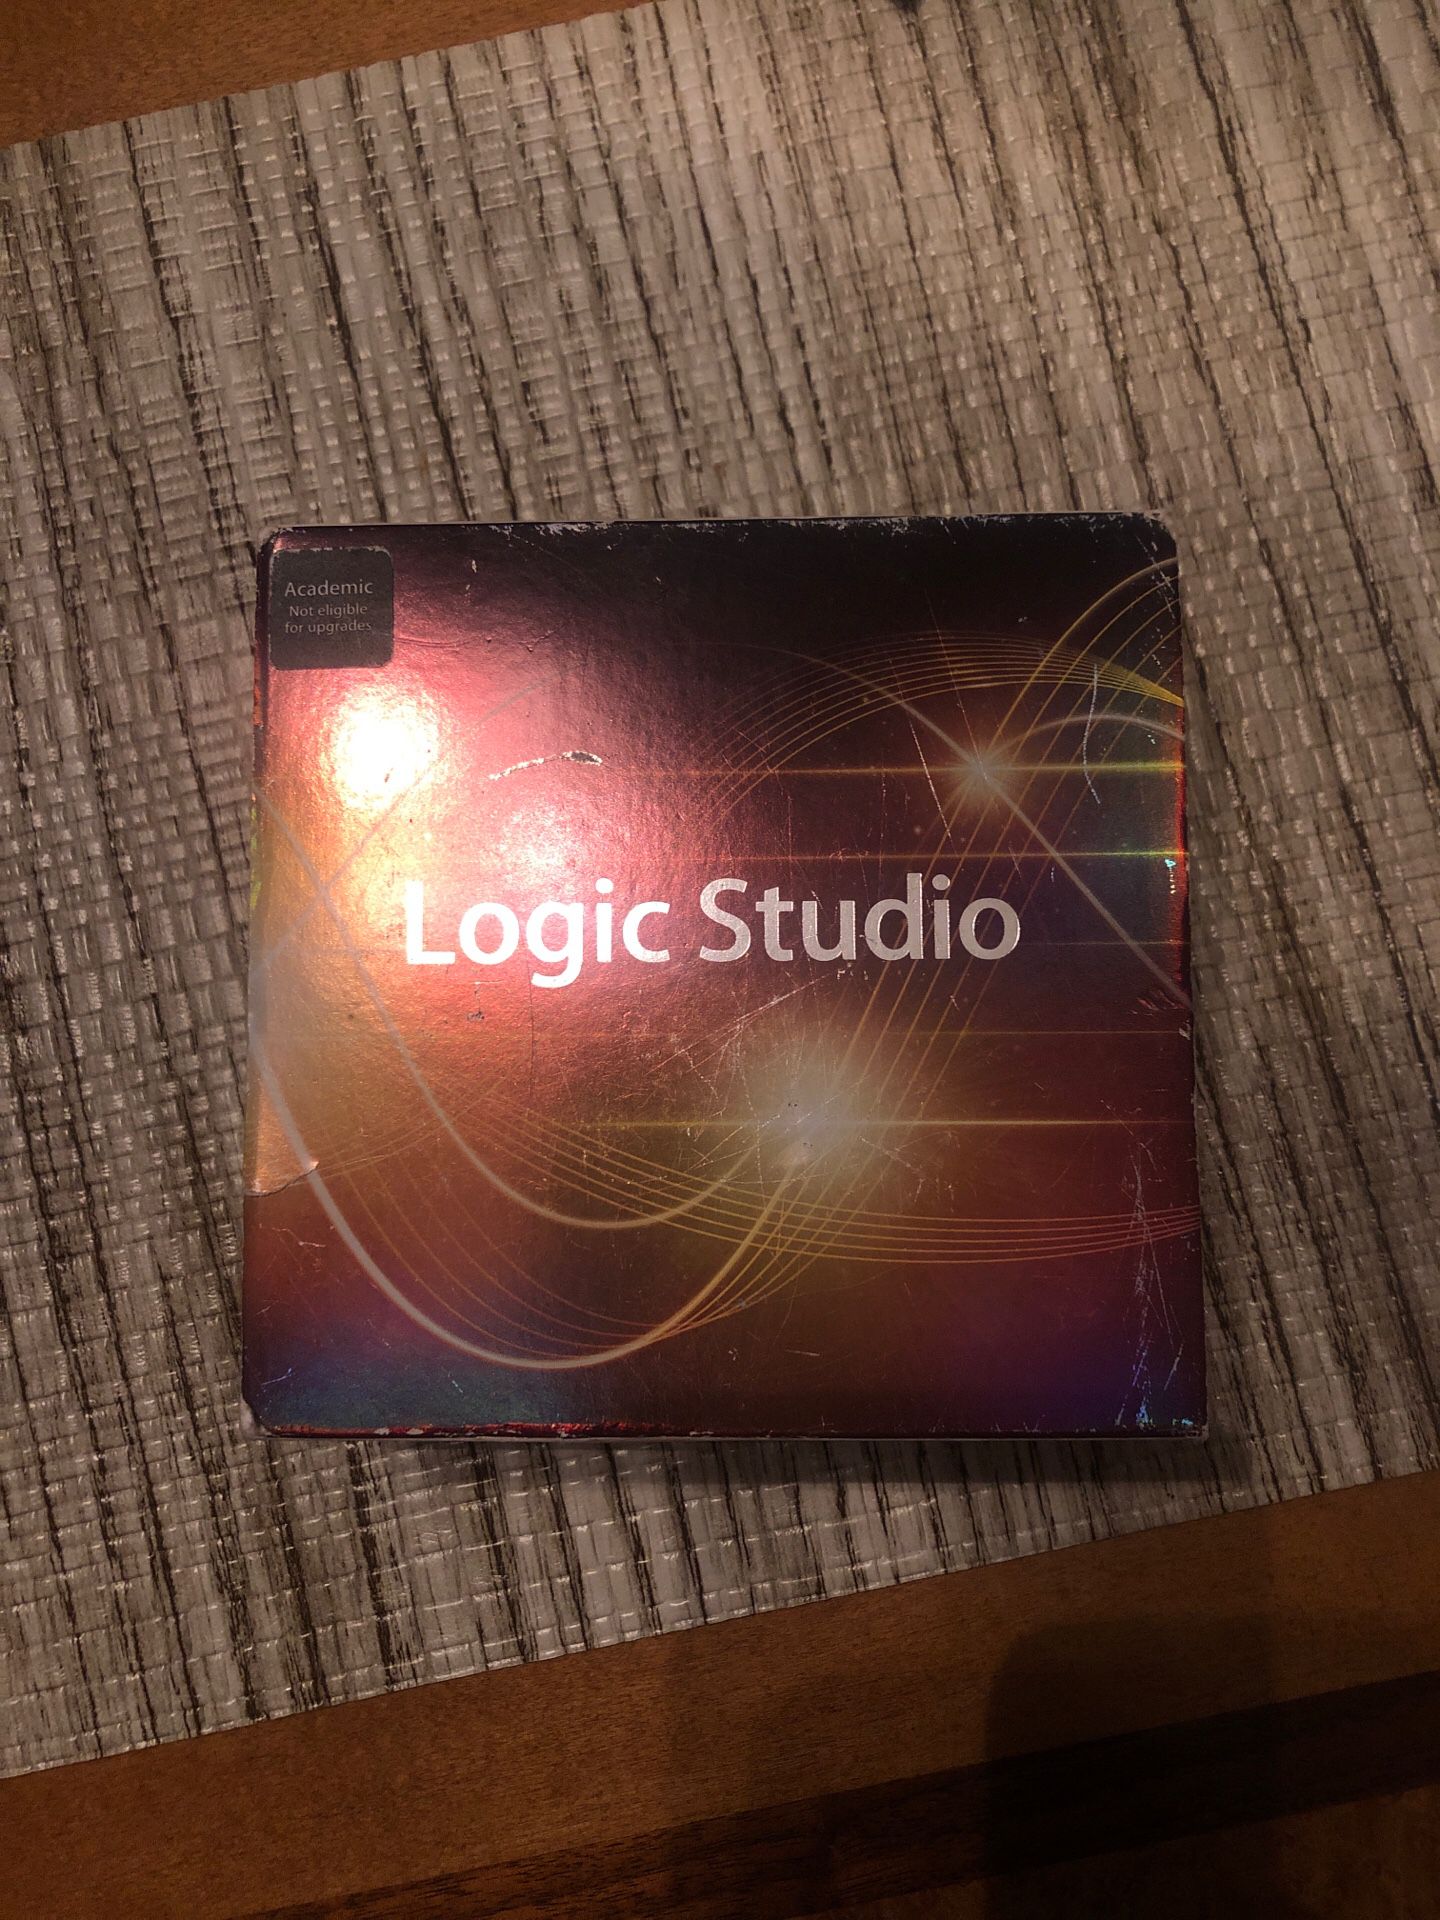 Logic Studio software